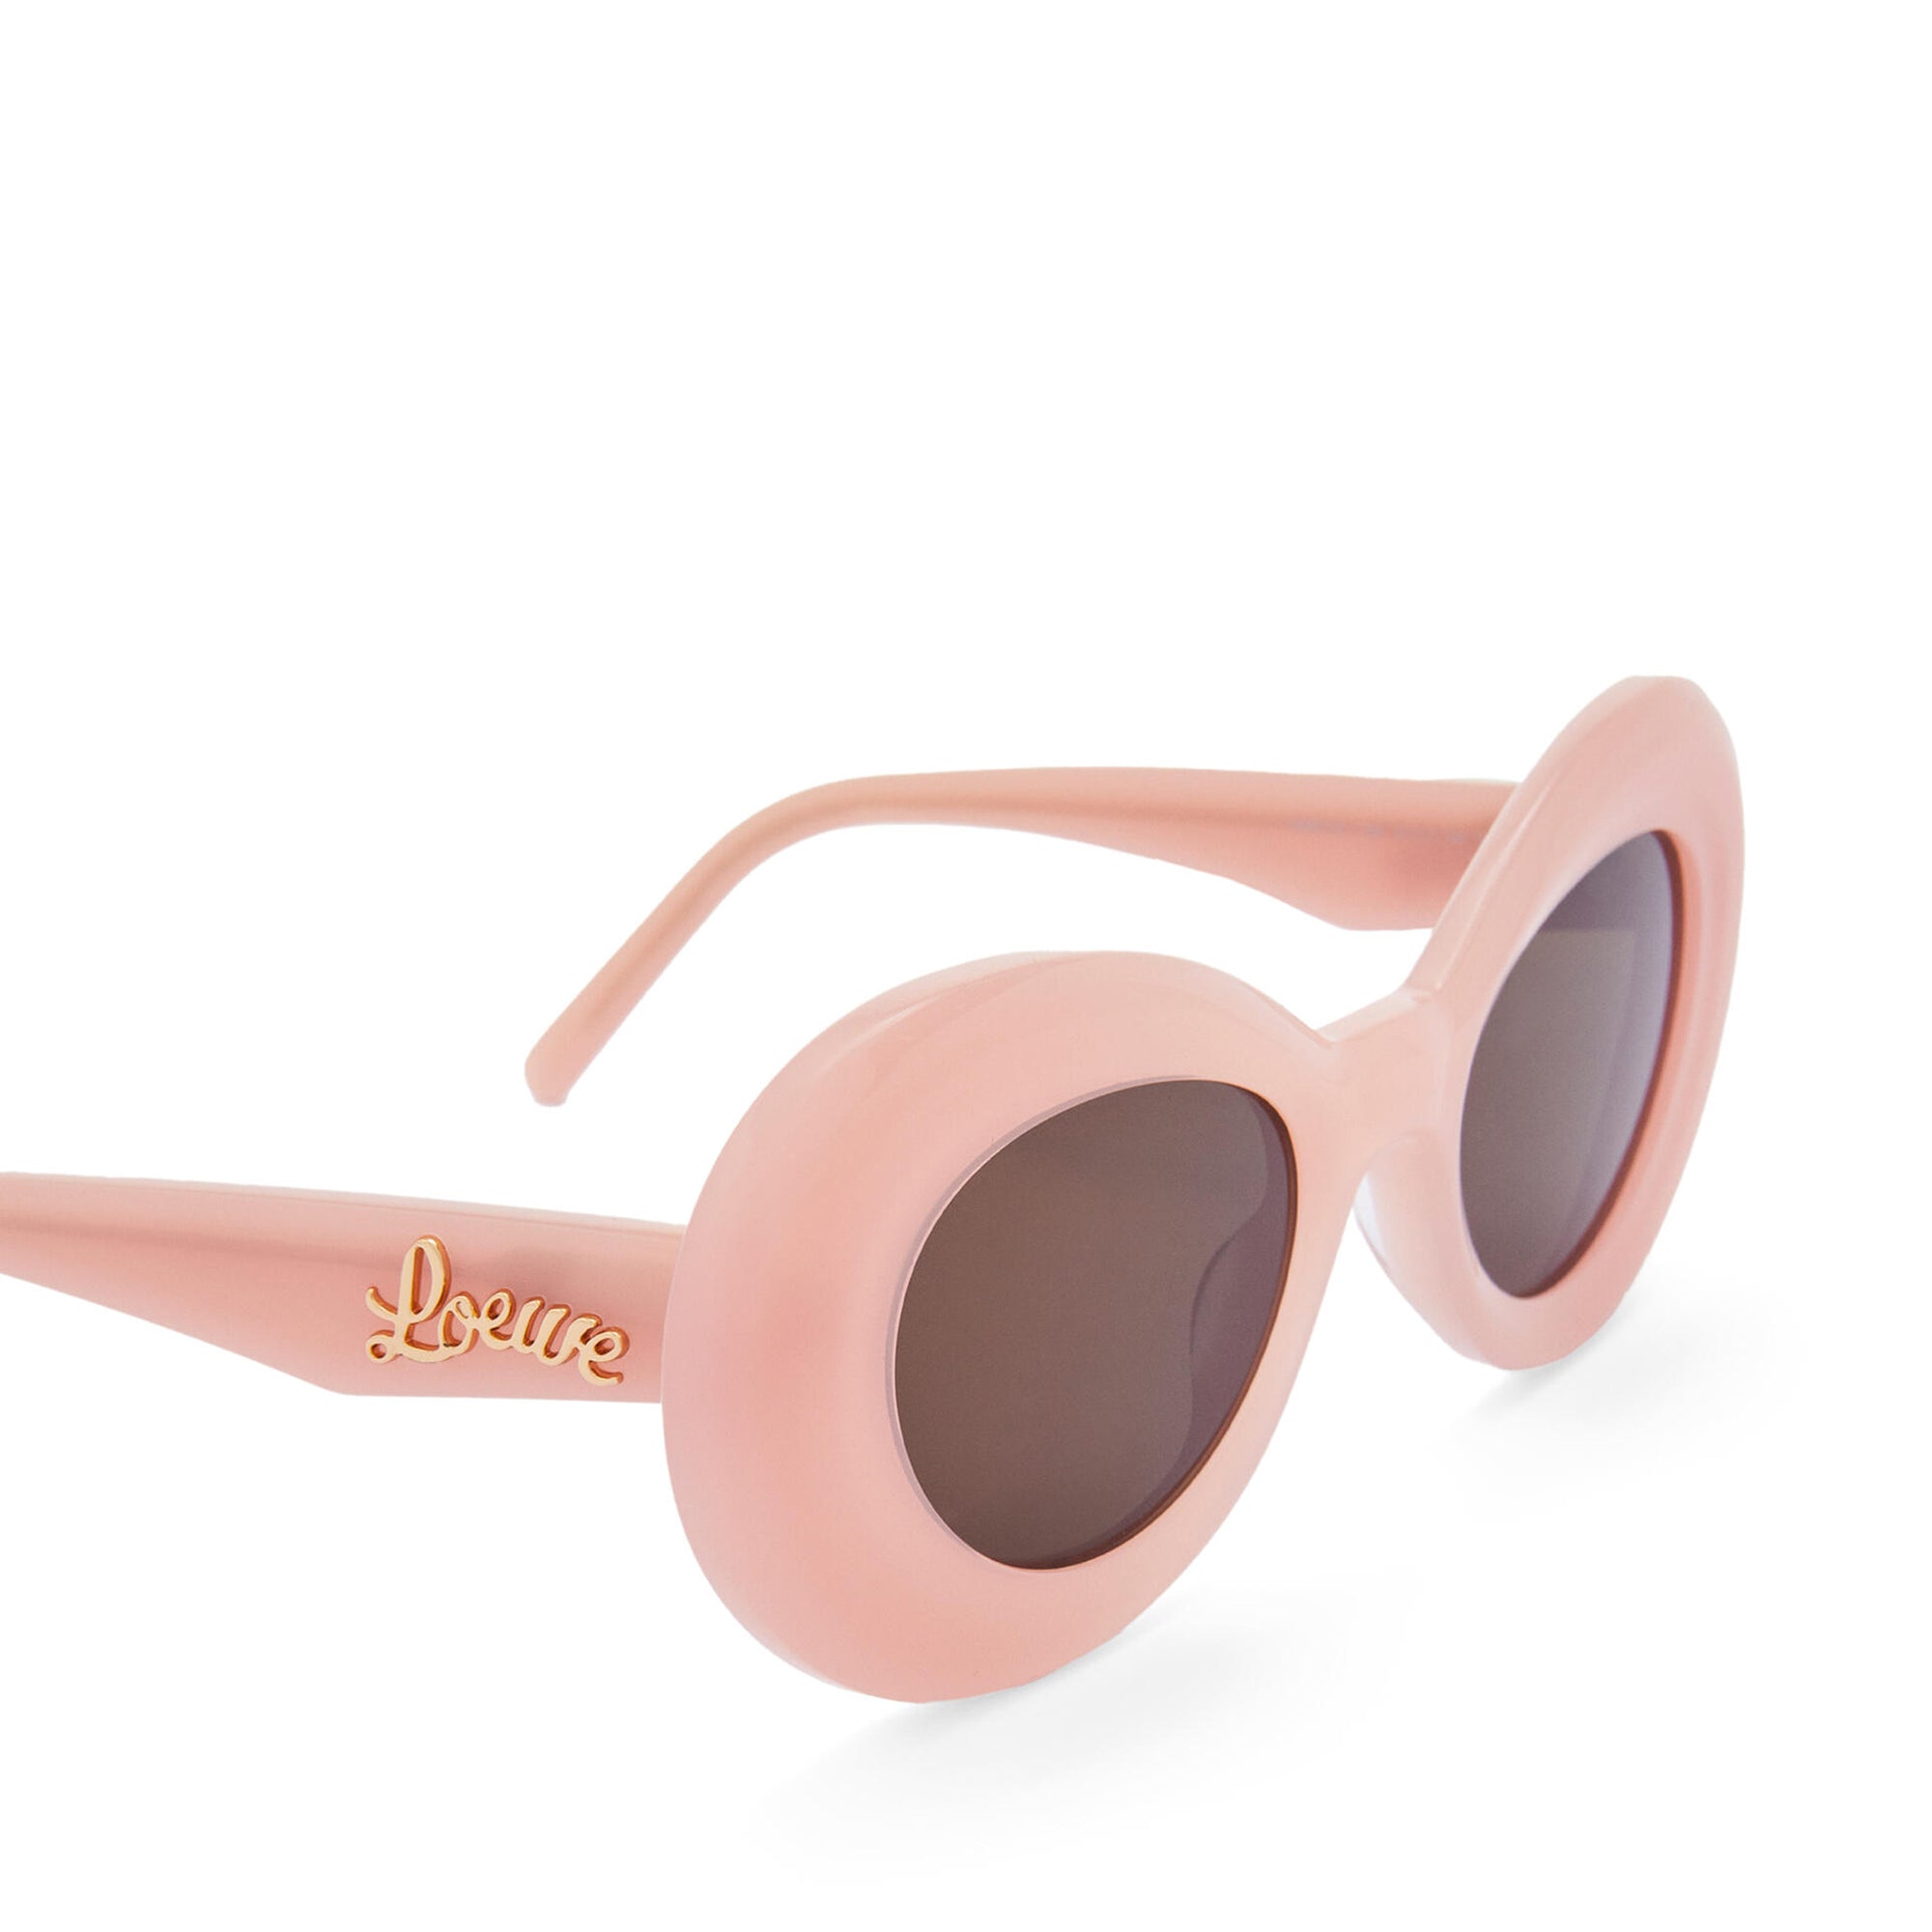 Loewe - Women’s Wing Sunglasses - (Light Pink) view 4